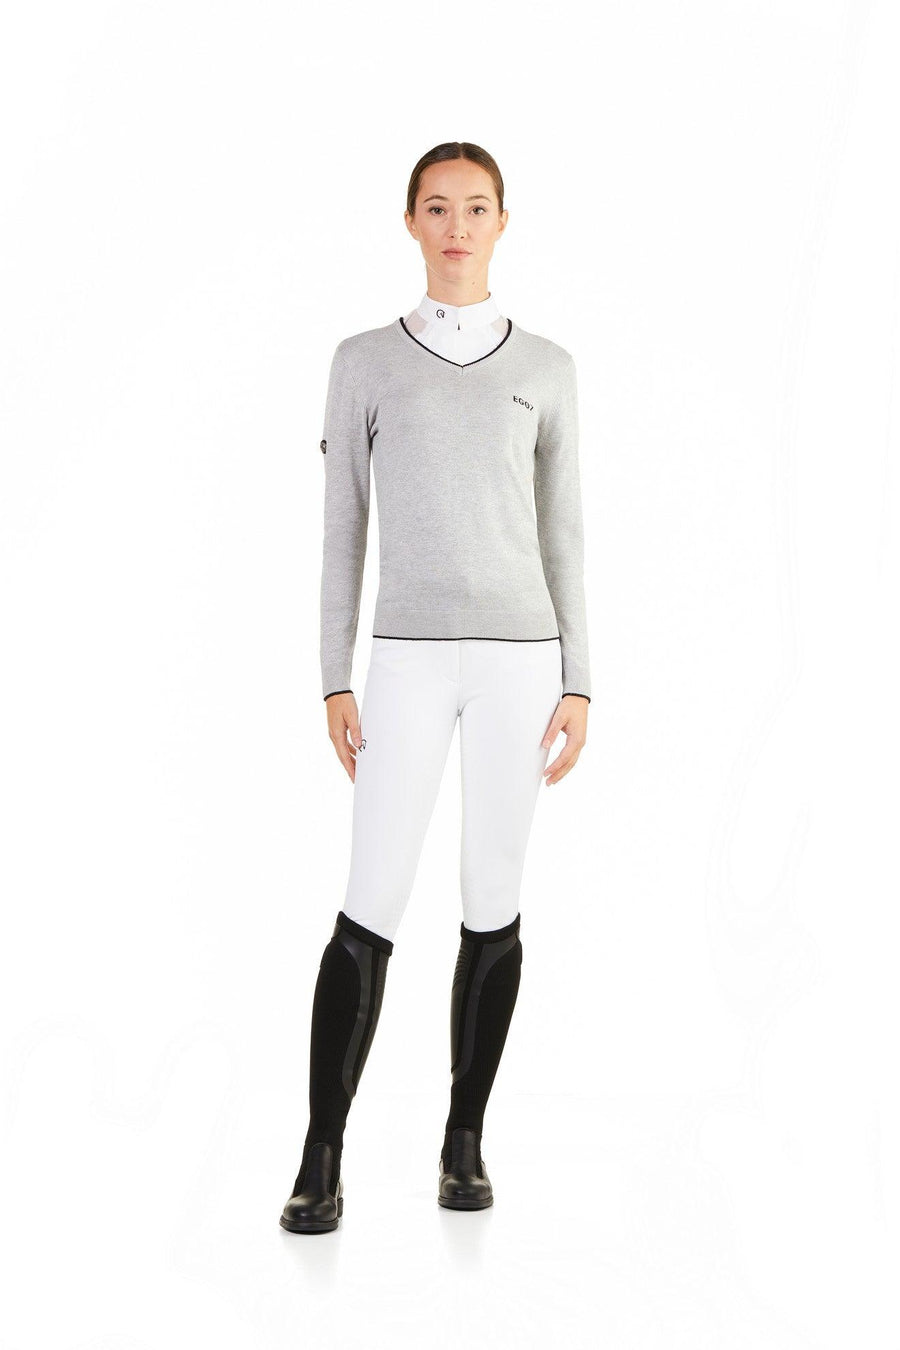 Ego 7 Vic V - neck sweater for ladies - HorseworldEU